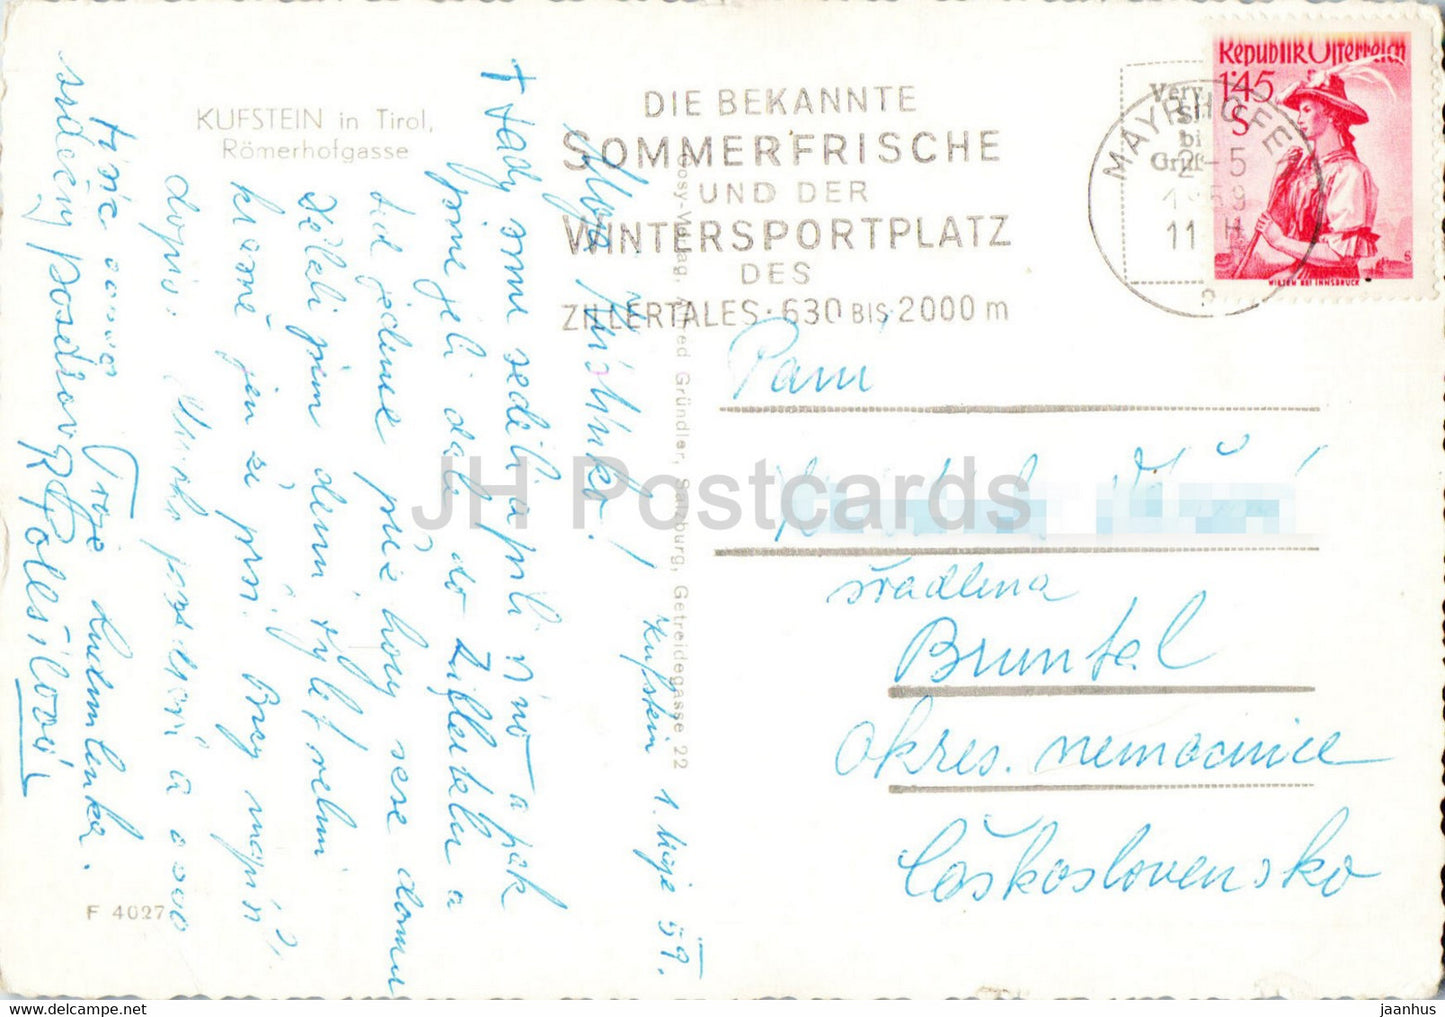 Kufstein in Tirol - Romerhofgasse - carte postale ancienne - 1959 - Autriche - utilisé